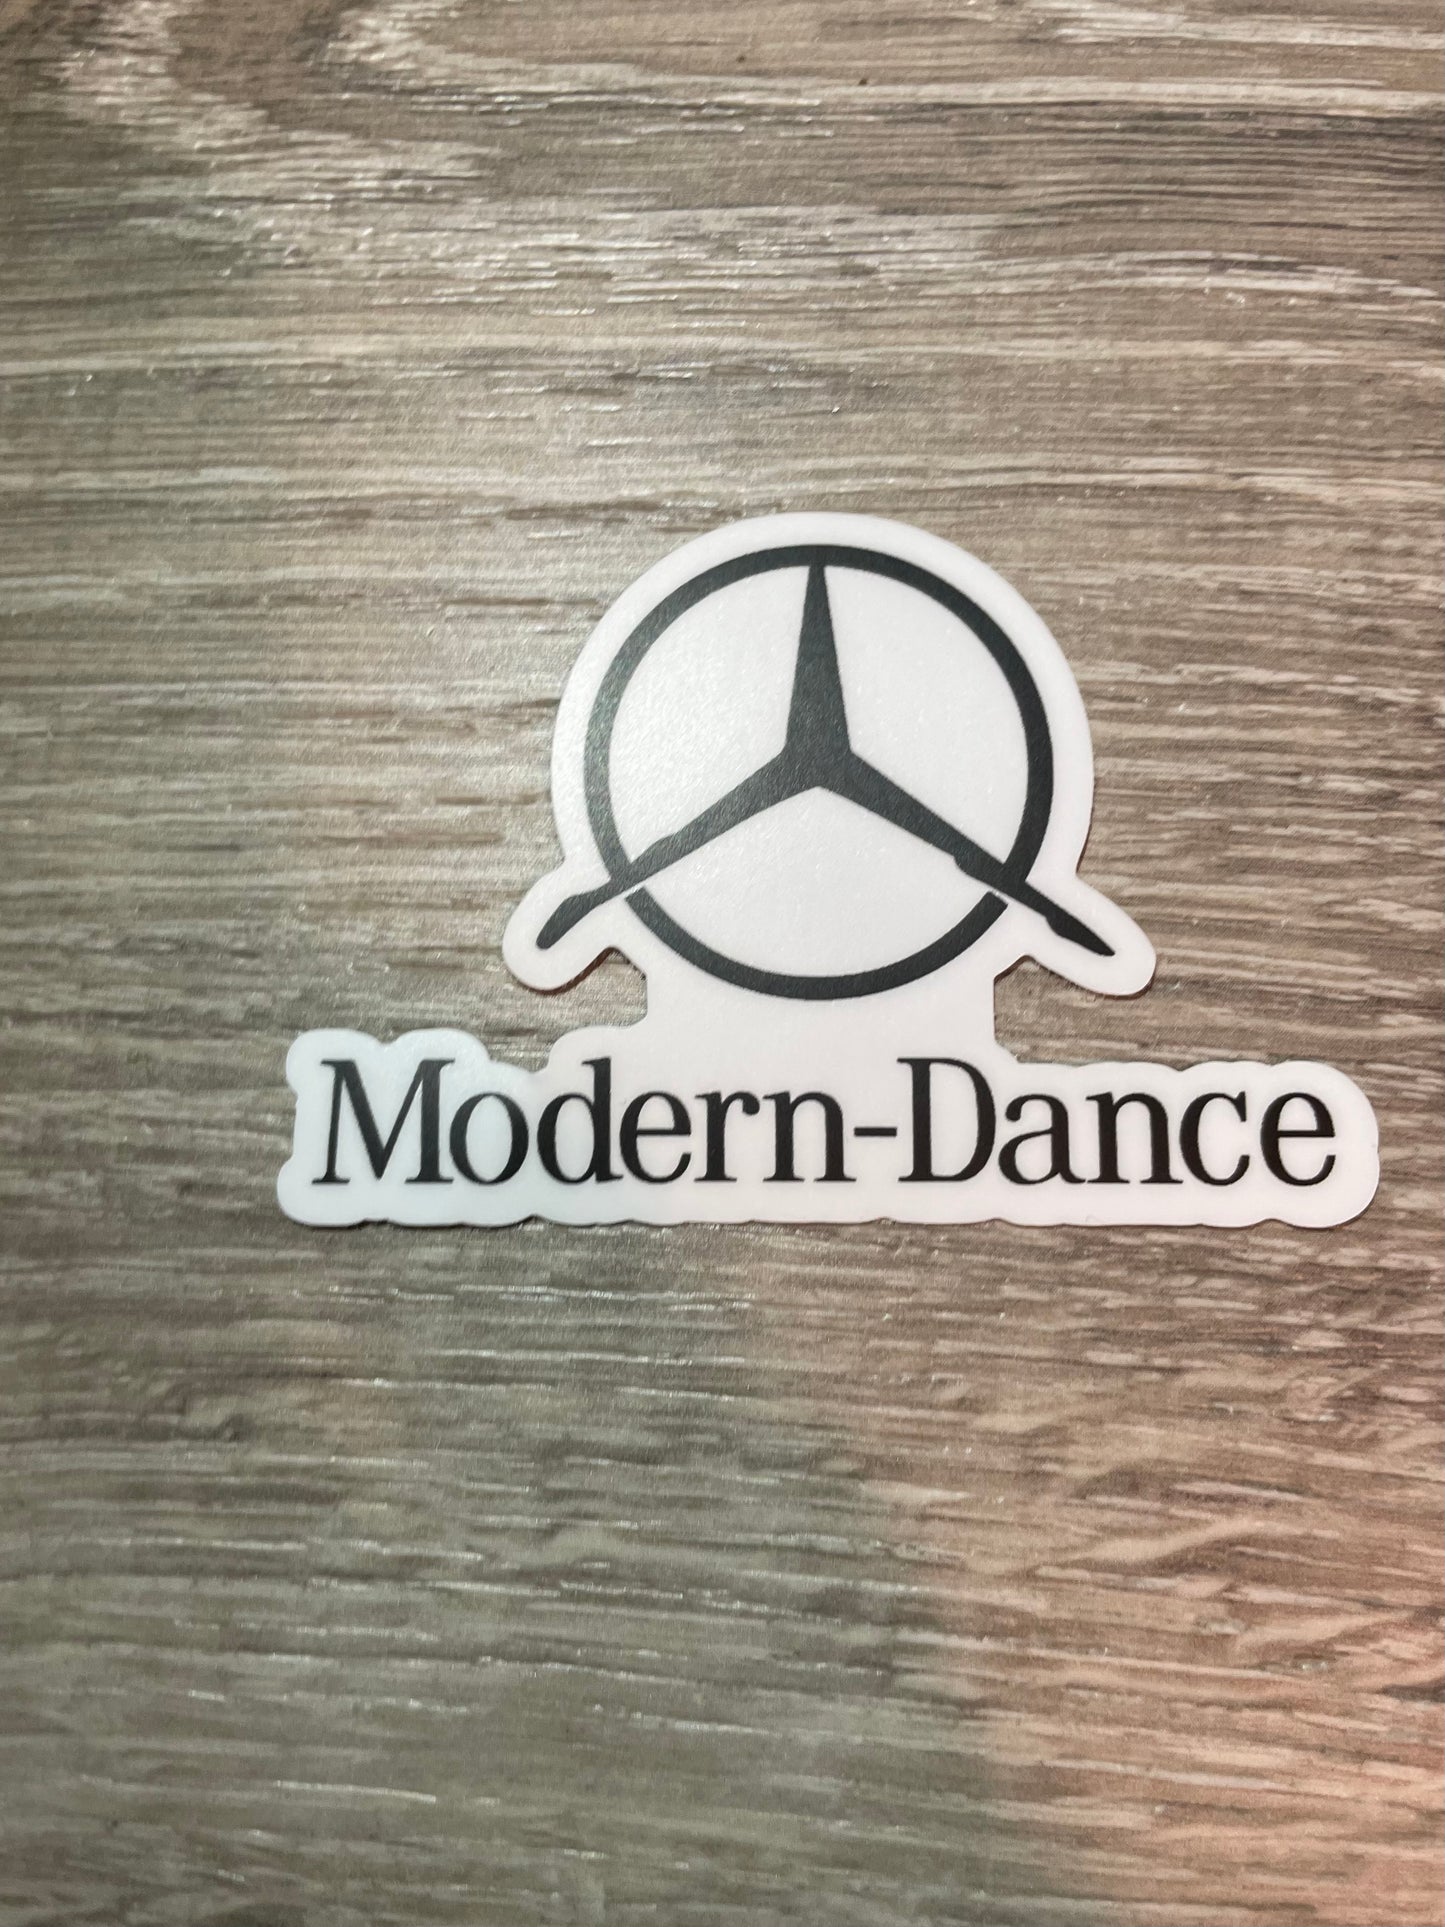 Modern Dance Vinyl Sticker, 3" x 2"